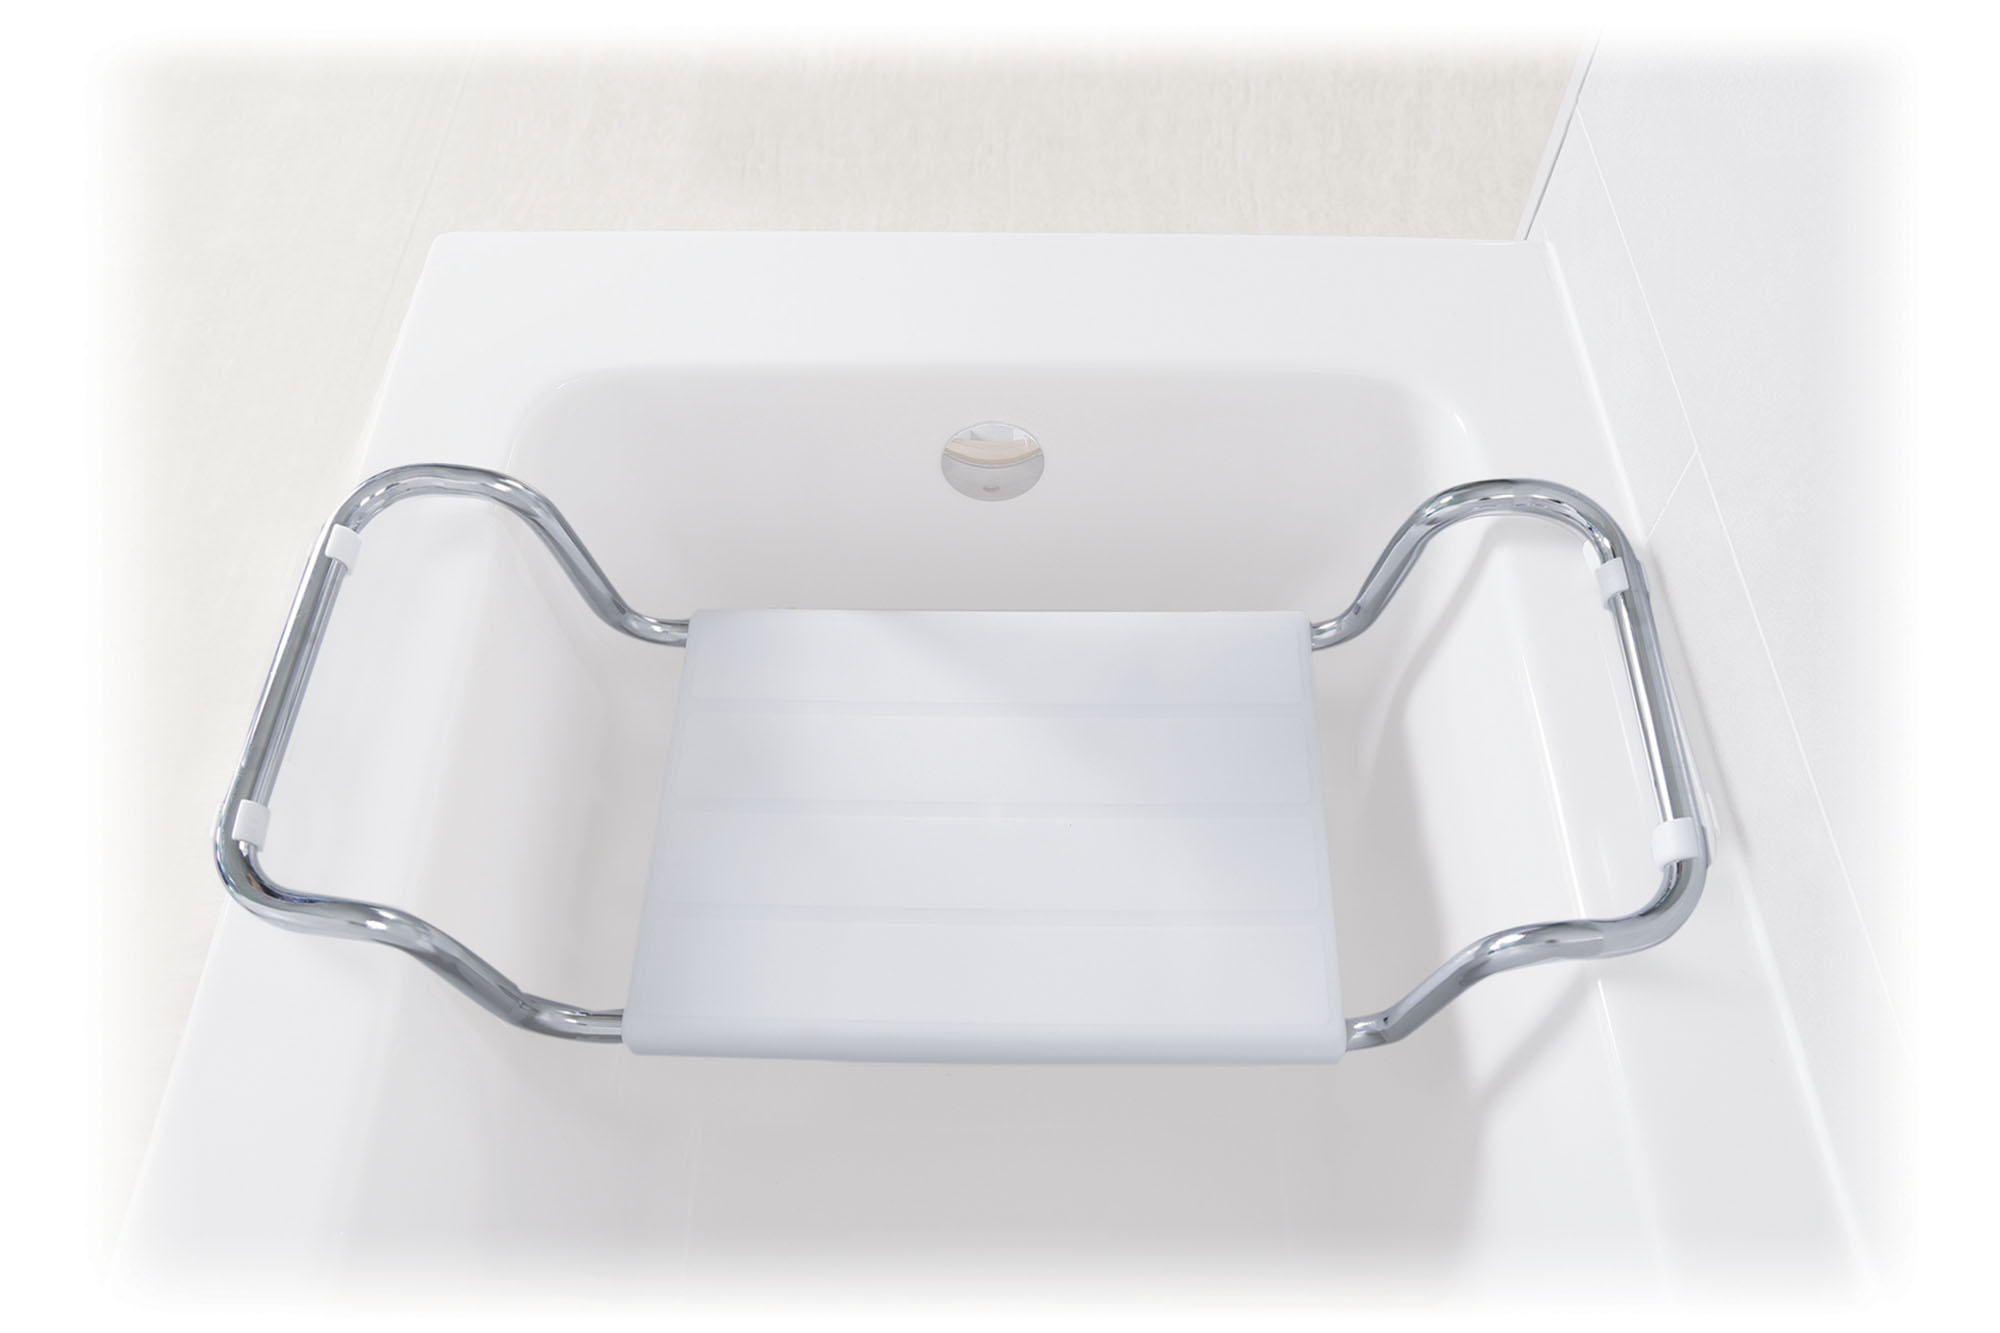 Comprar asientos para bañera Ortopedia online asientos bañera Seguridad baño